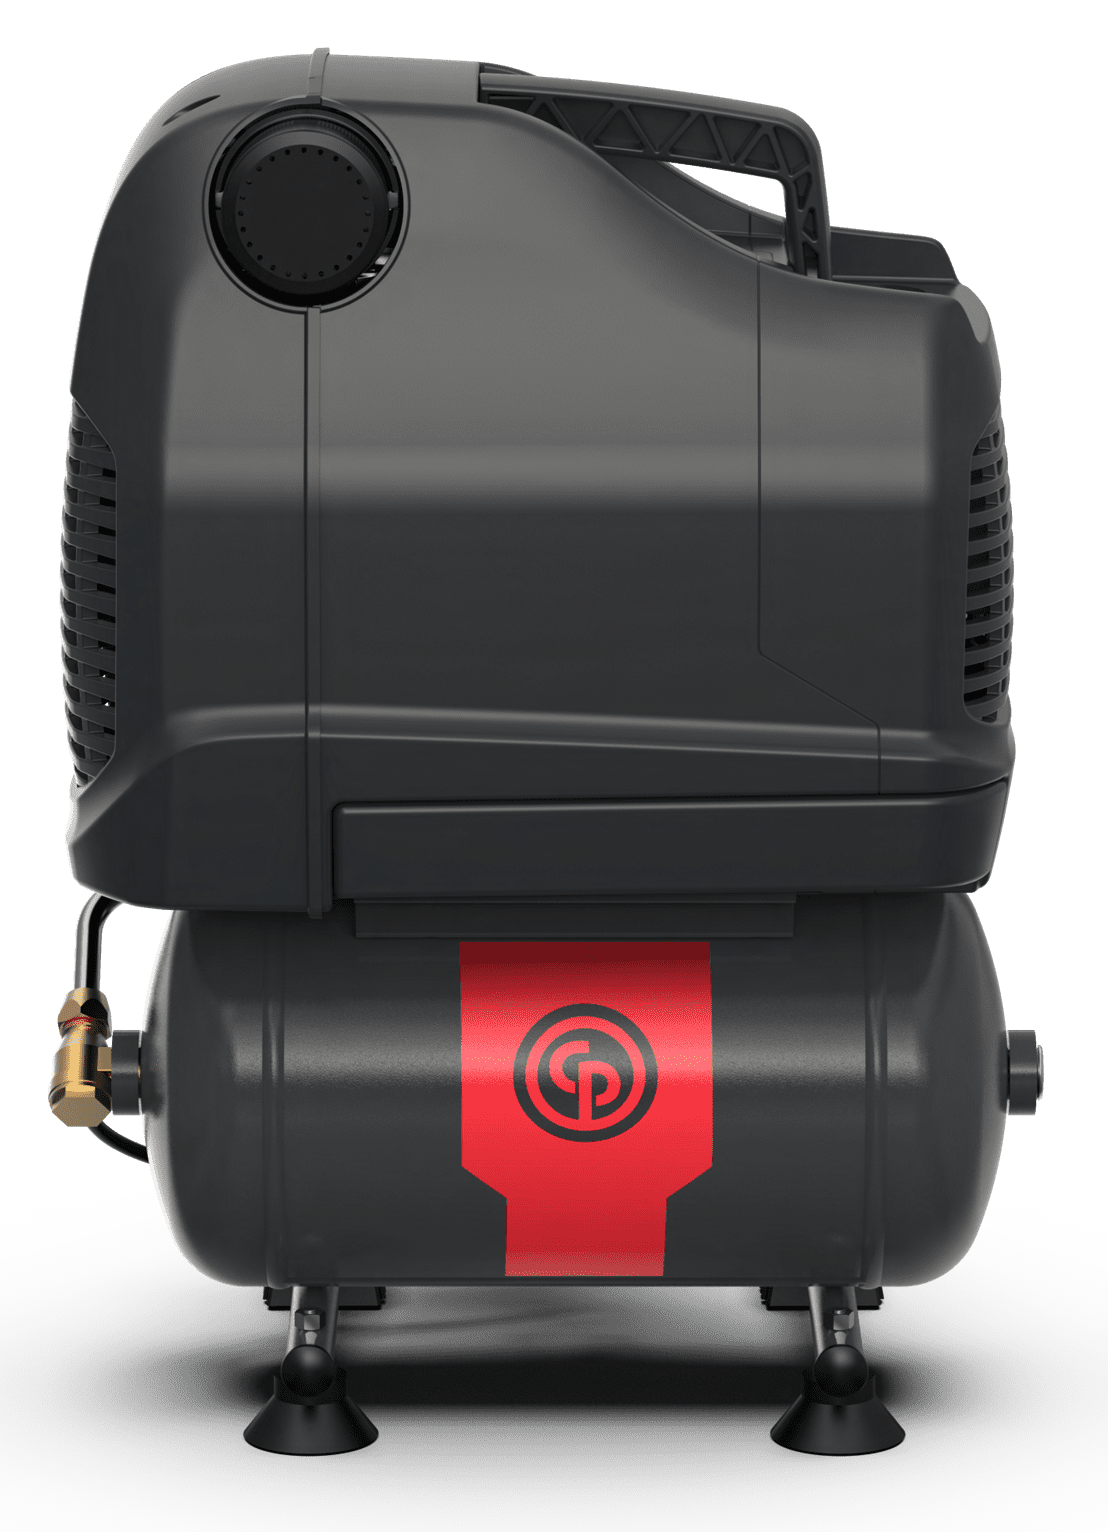 Chicago Pneumatic CPRA/CPRB Series Direct-Driven Piston Air Compressors